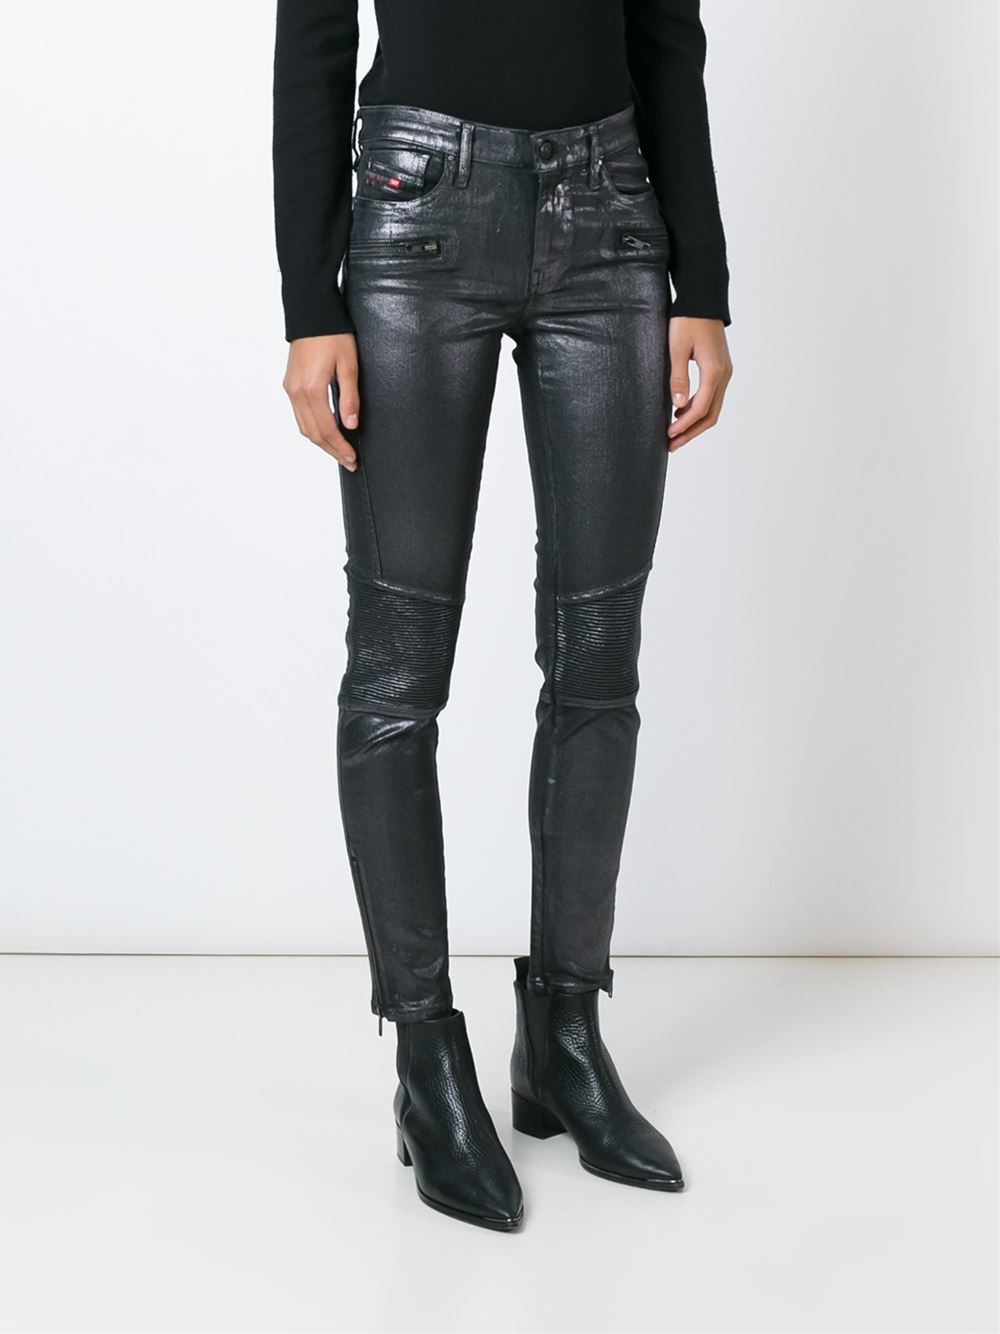 black metallic jeans